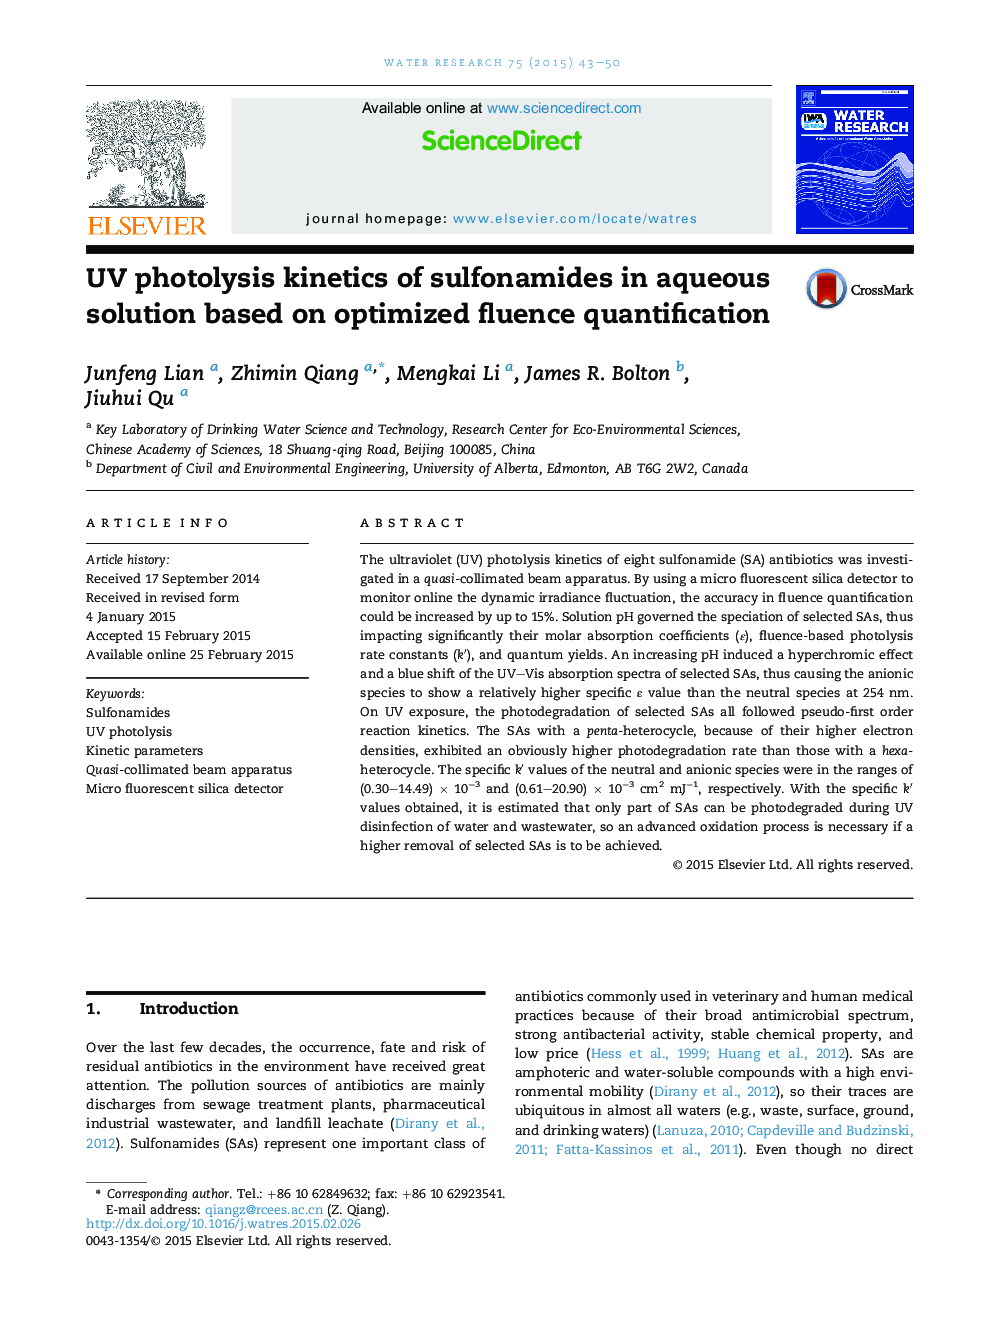 UV photolysis kinetics of sulfonamides in aqueous solution based on optimized fluence quantification